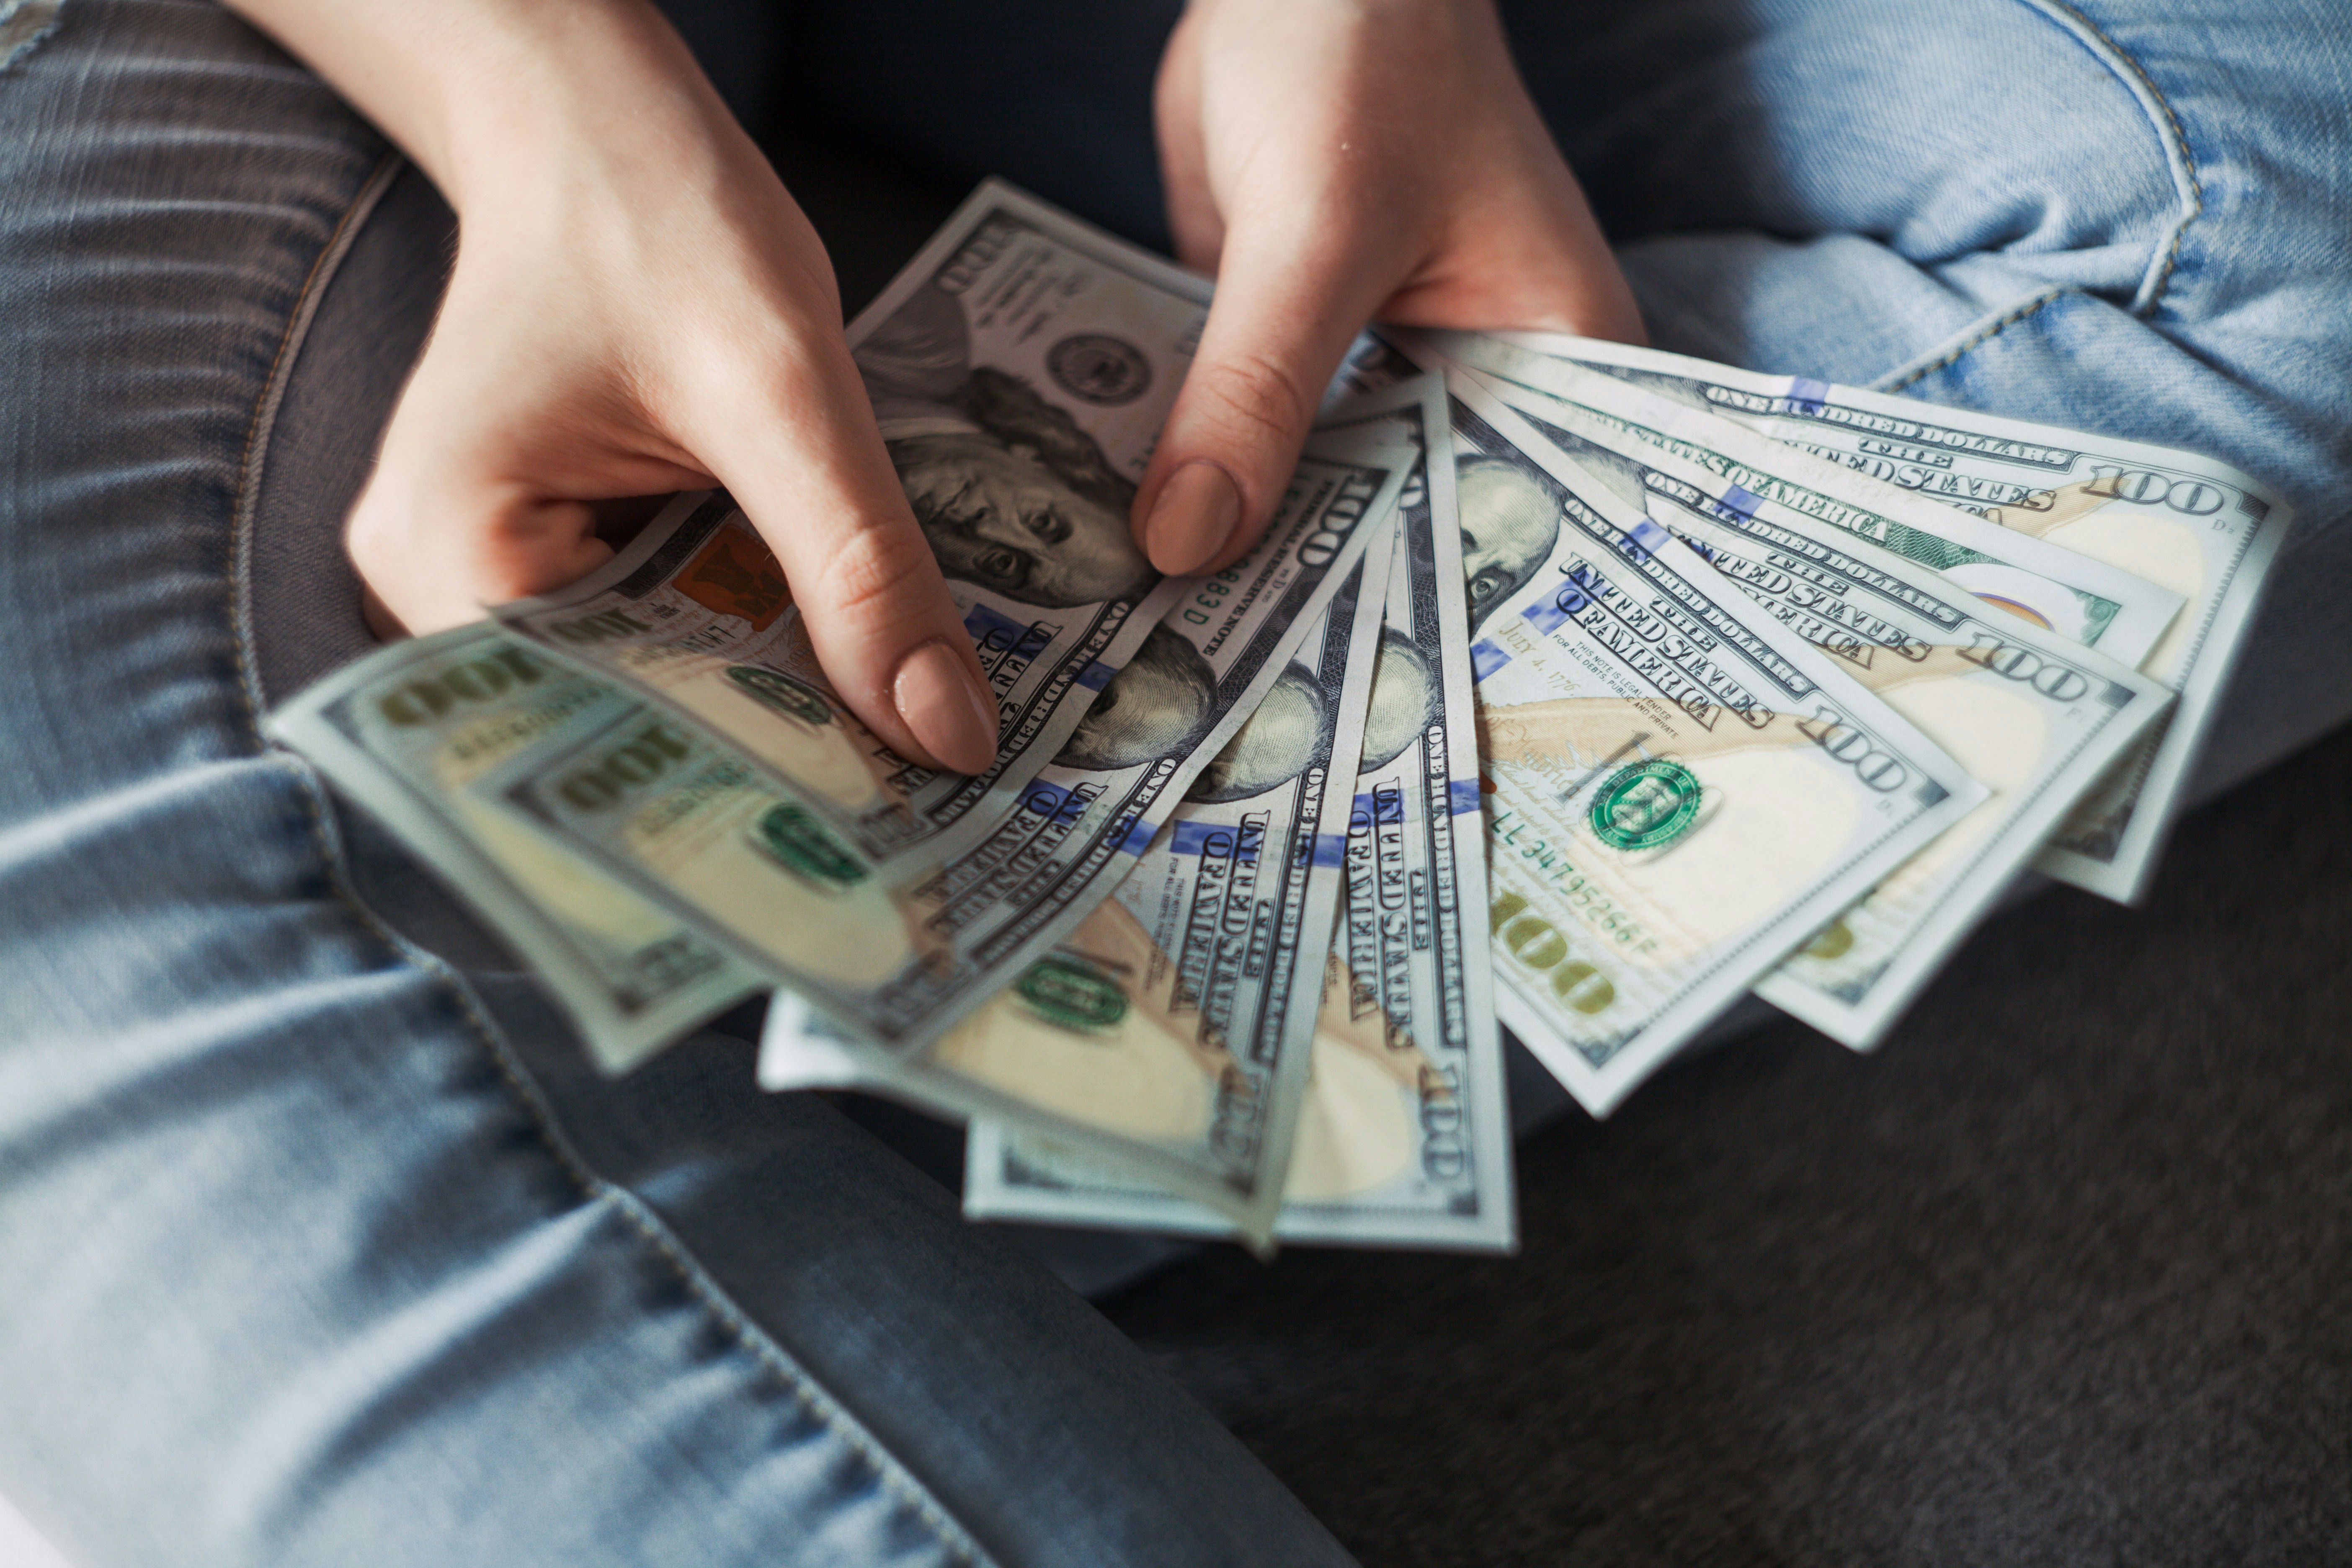 A person holding dollar bills | Source: Unsplash